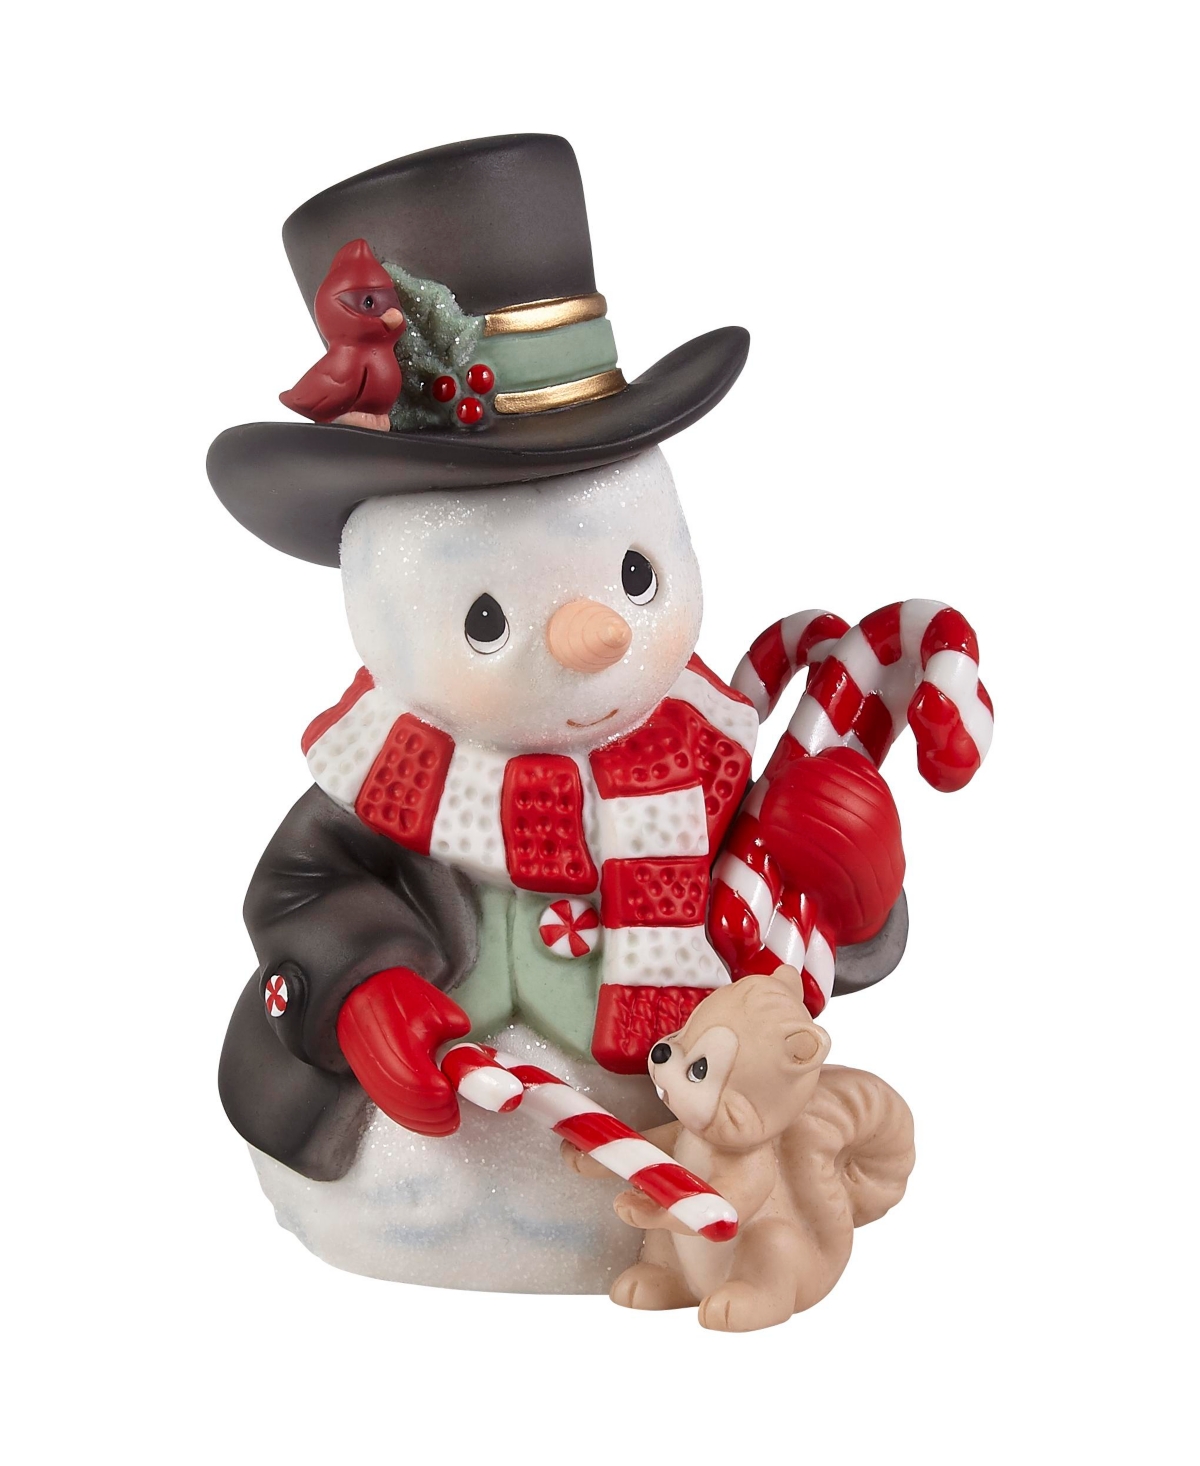 221015 Wishing You a Sweet Season Annual Snowman Bisque Porcelain Figurine - Multicolor